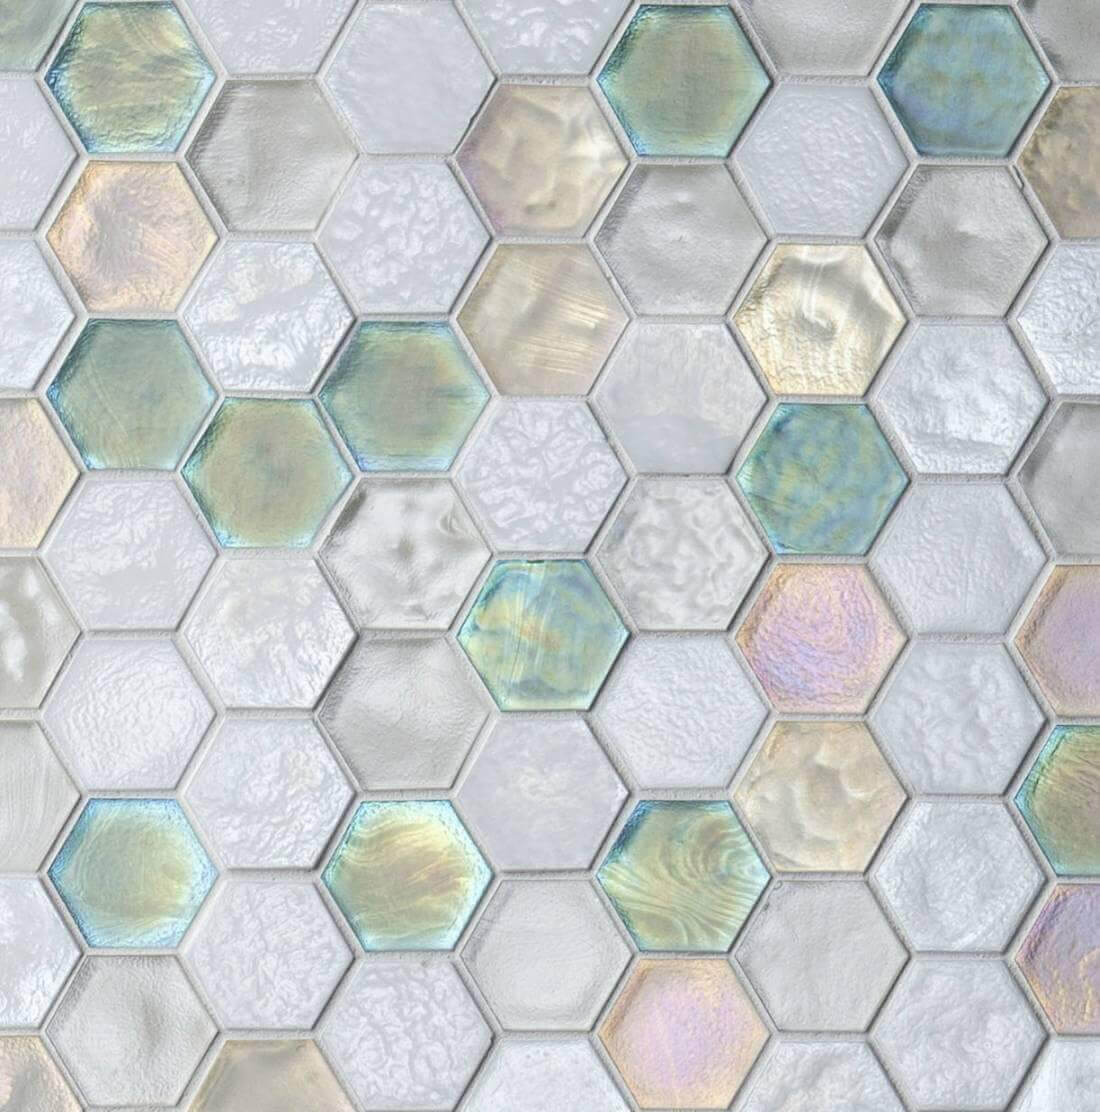 Hexagon mosaic tile in pastel tones